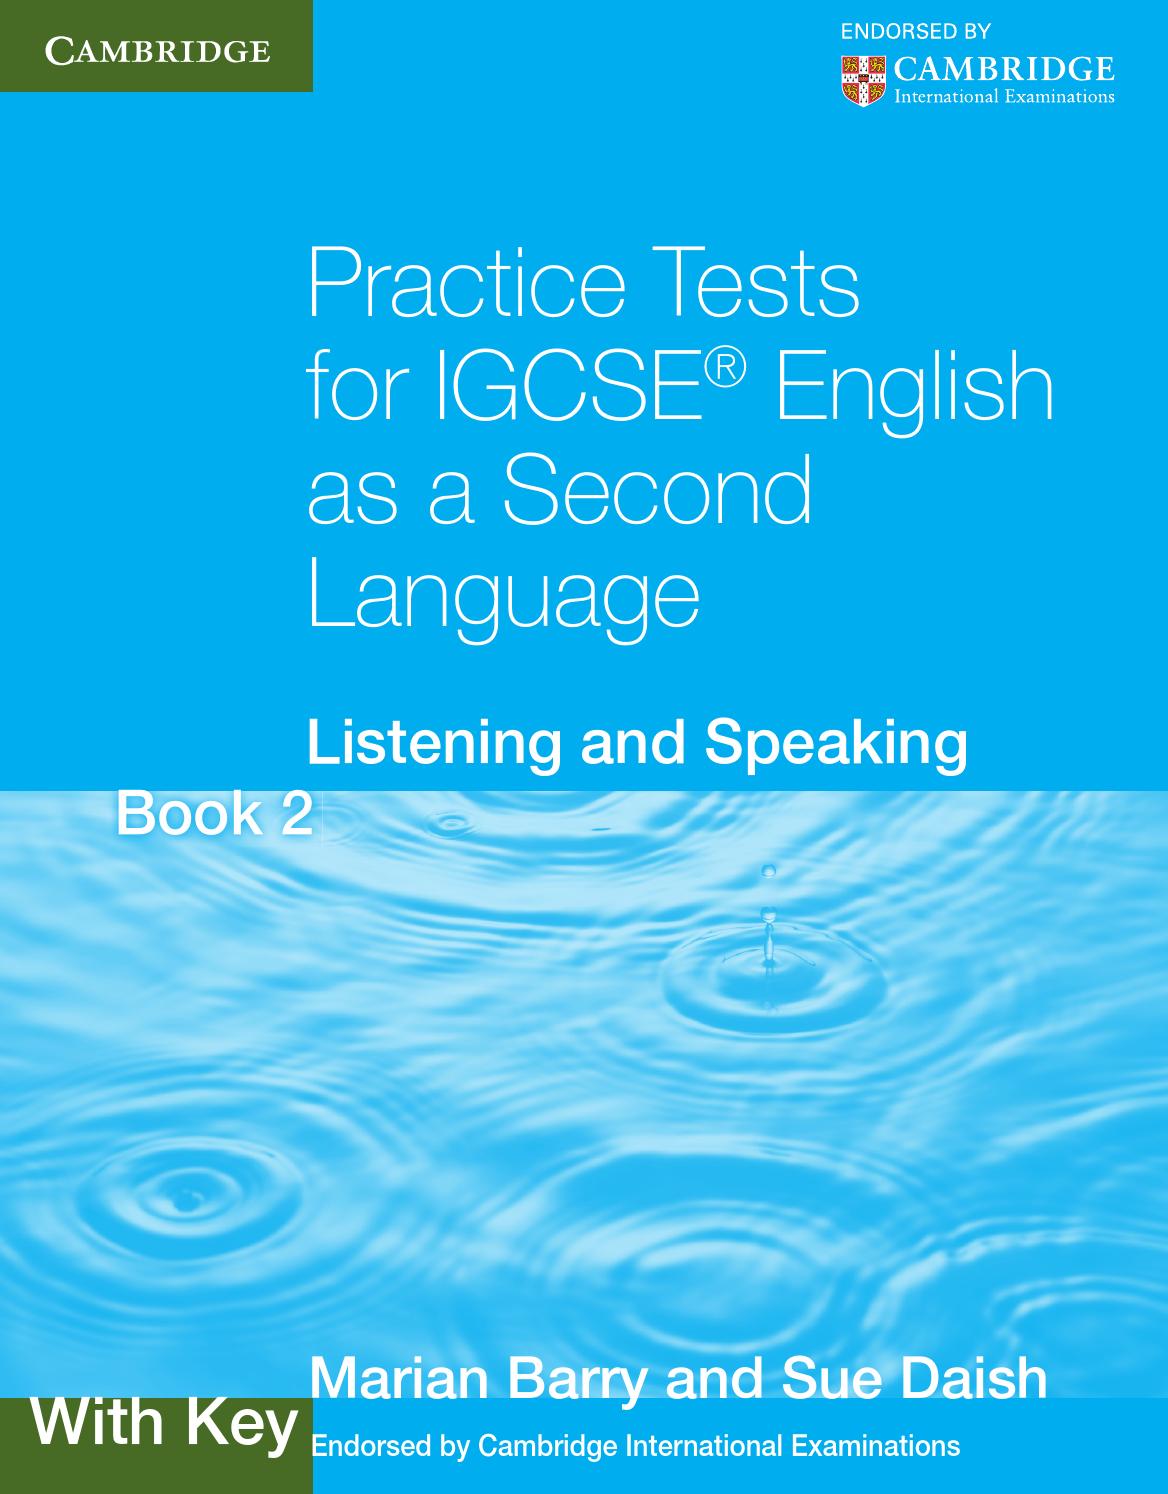 igcse english as a second language listening tracks free download